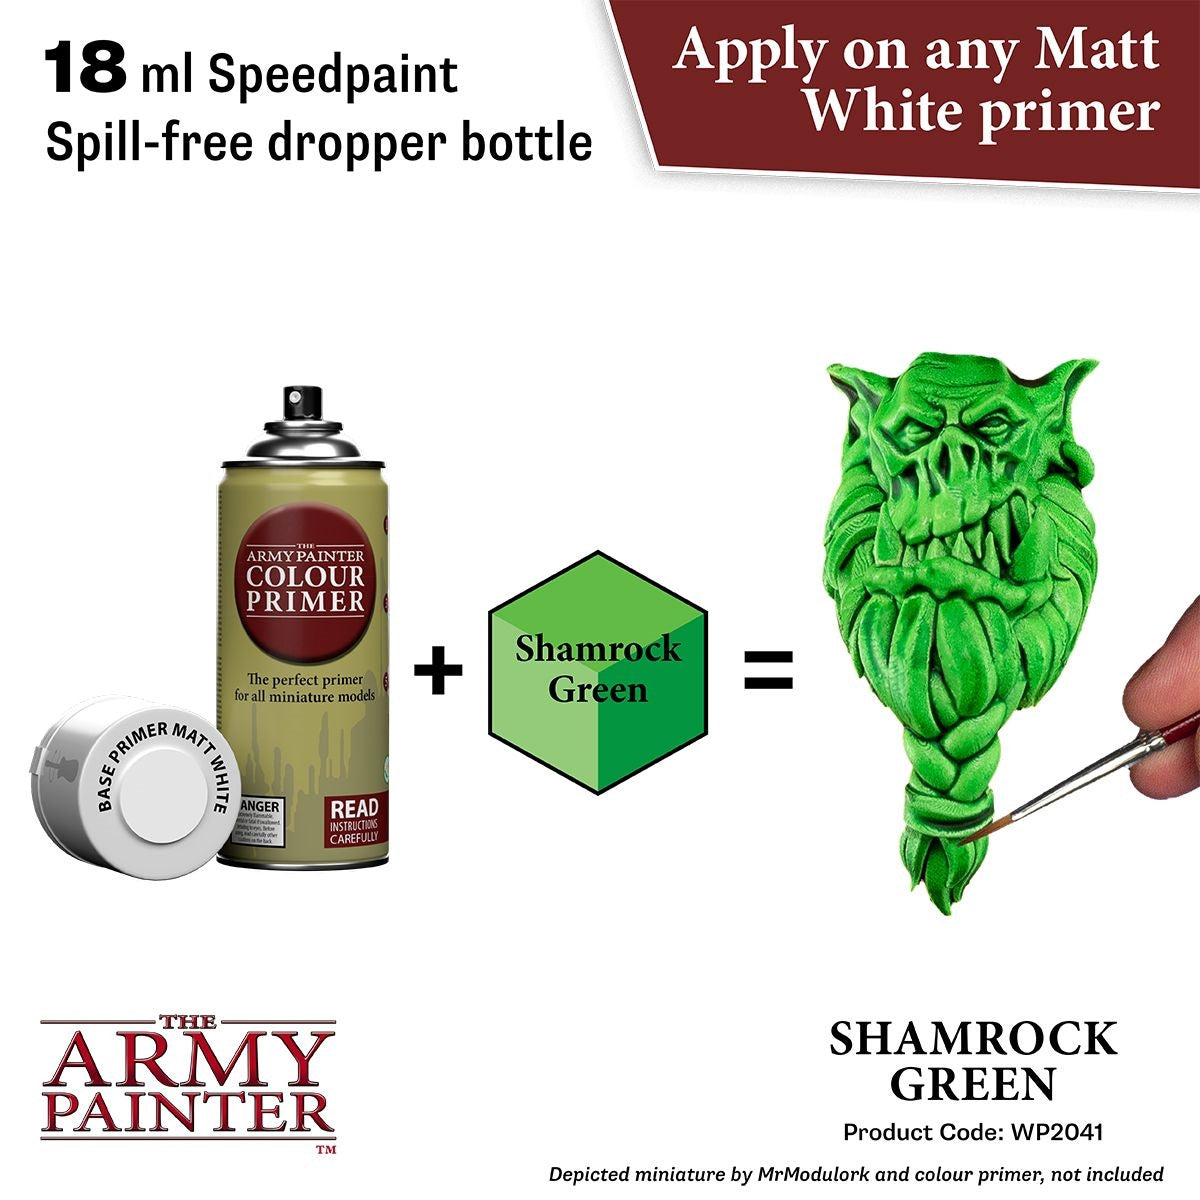 Army Painter Speedpaint: 2.0 - Medium 100 ml